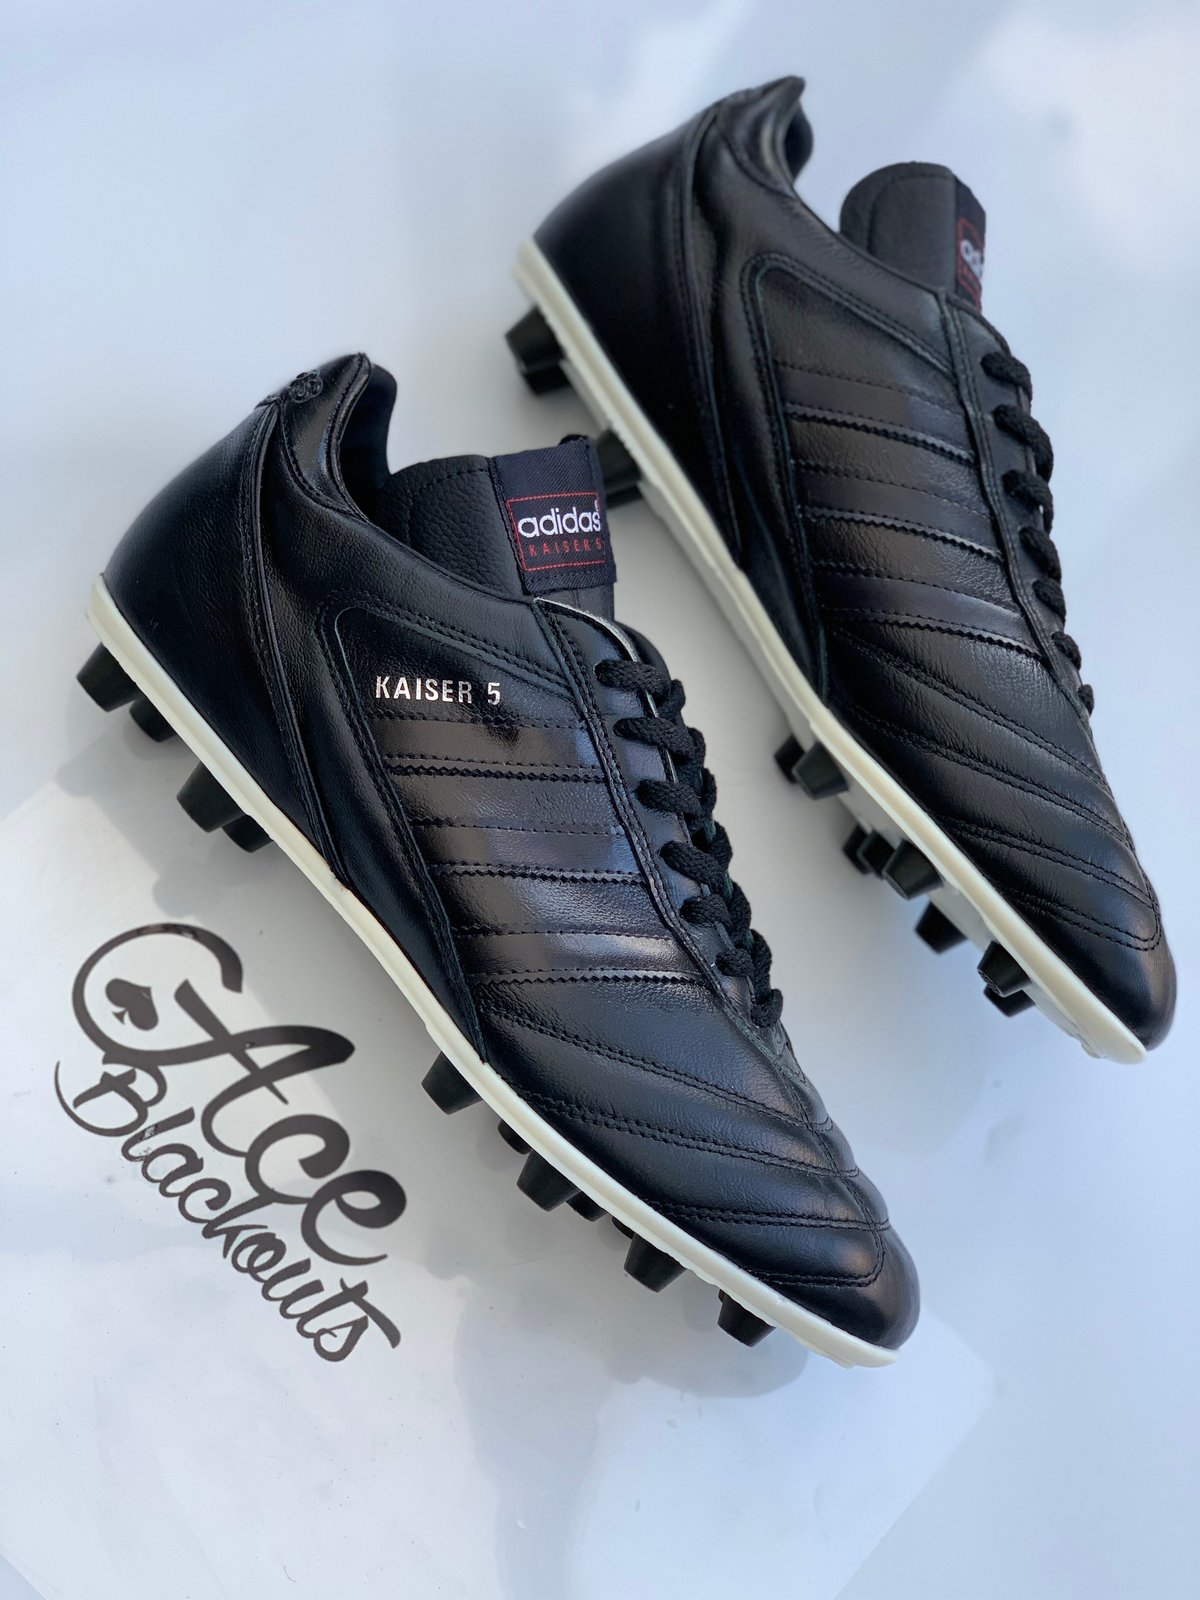 kaiser adidas football boots